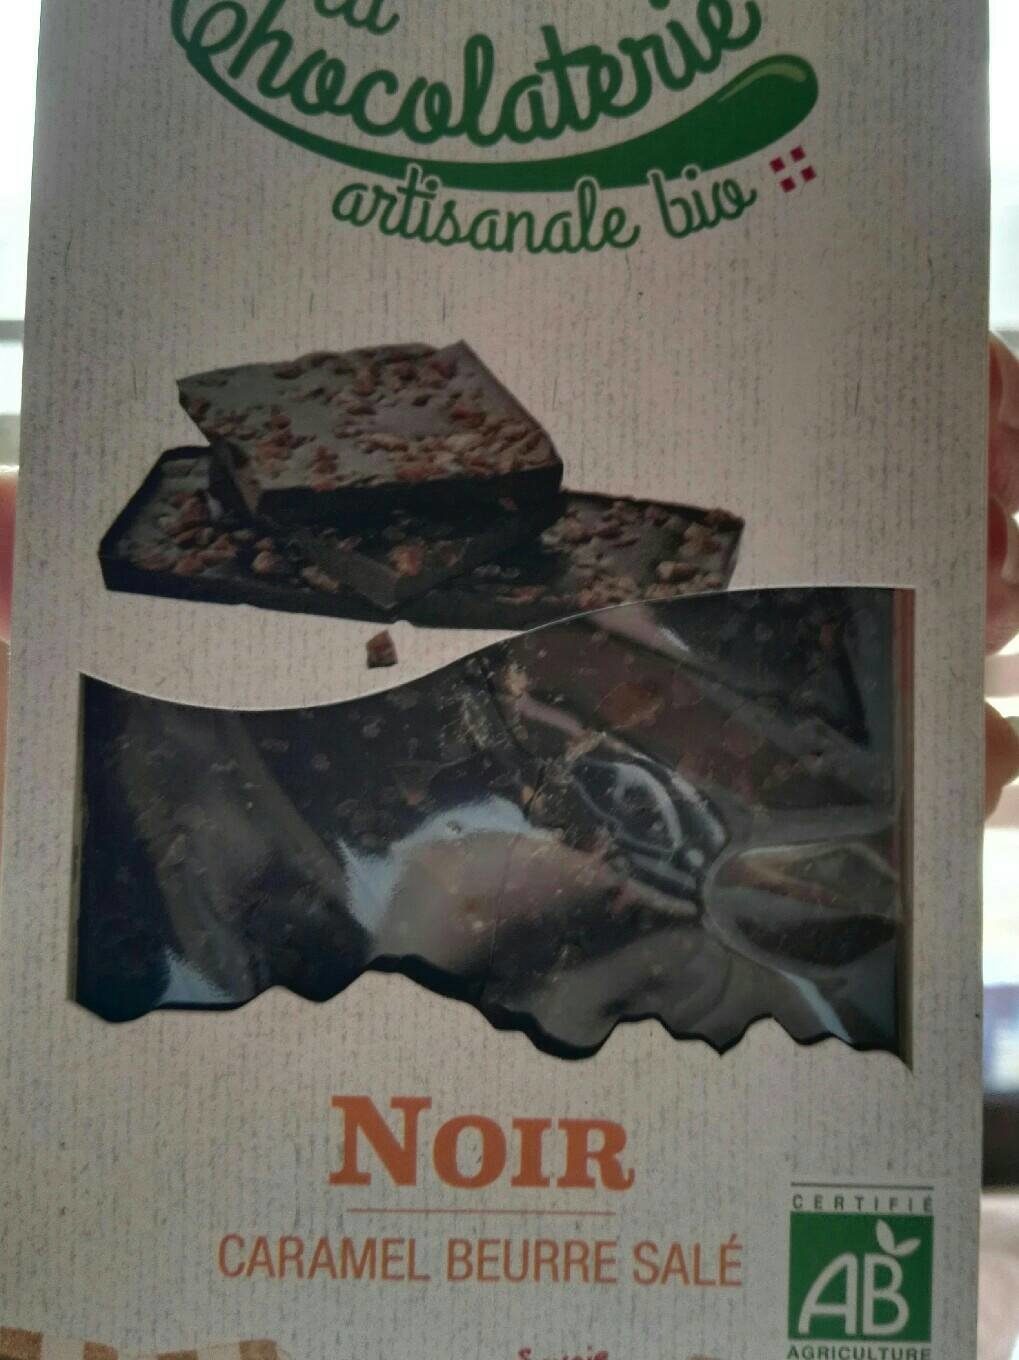 Noir caramel beurre salé - Product - fr